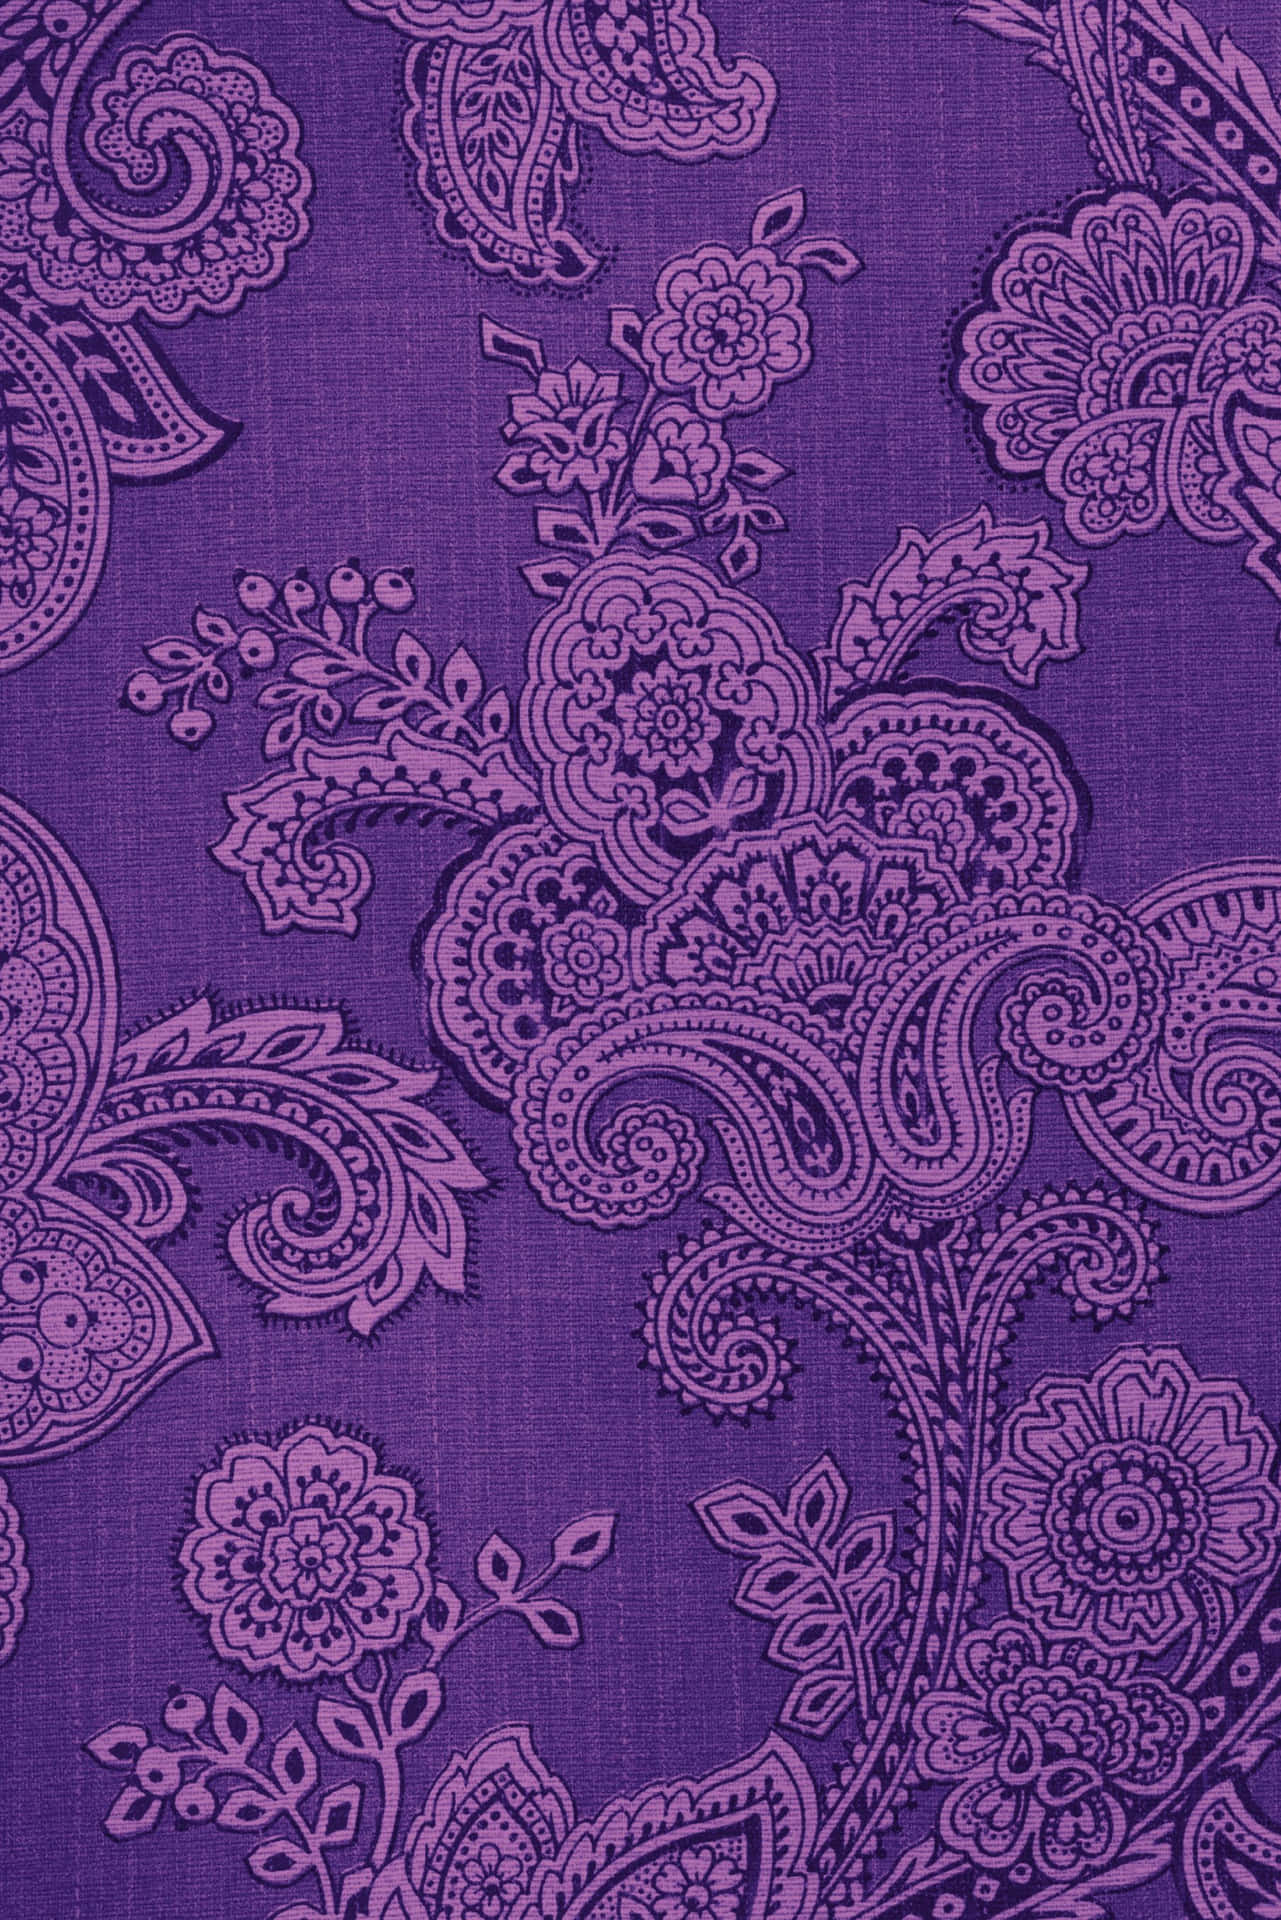 A Purple Paisley Pattern On A Fabric Wallpaper